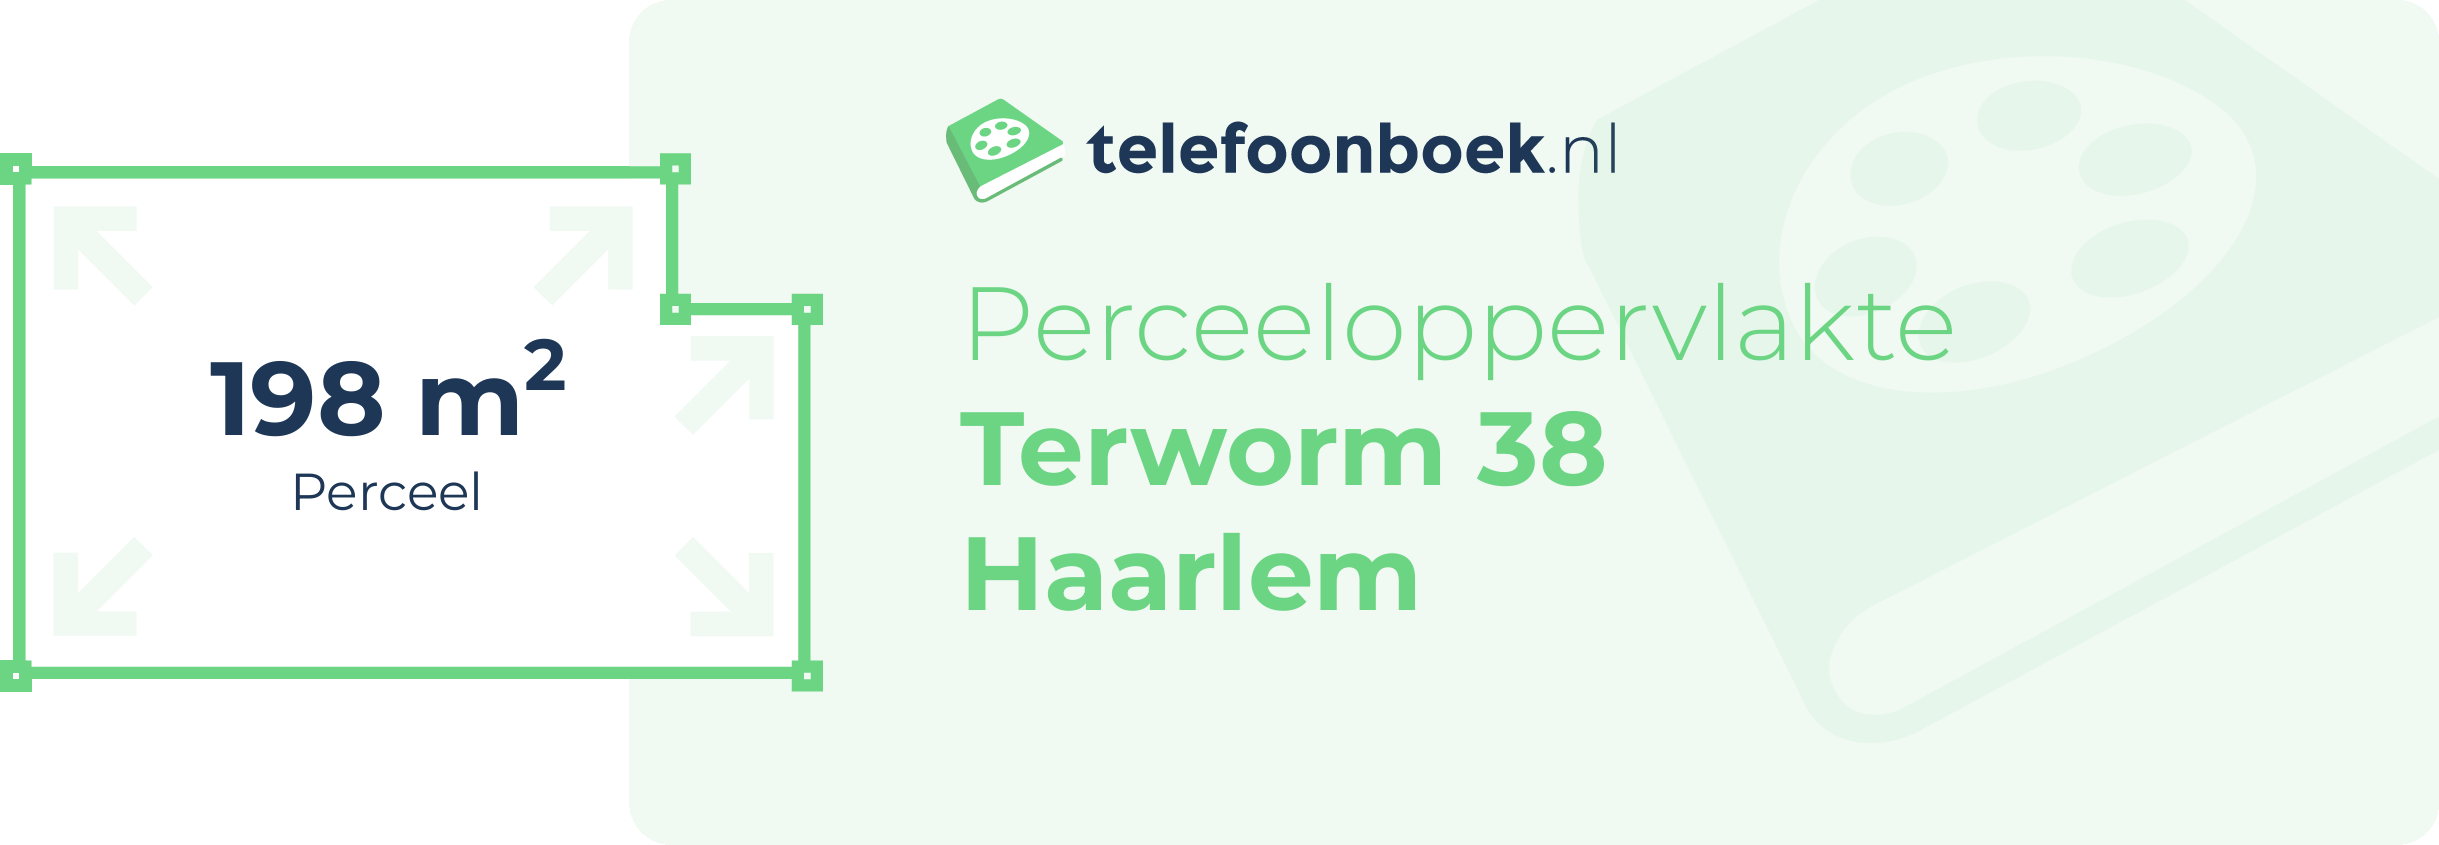 Perceeloppervlakte Terworm 38 Haarlem